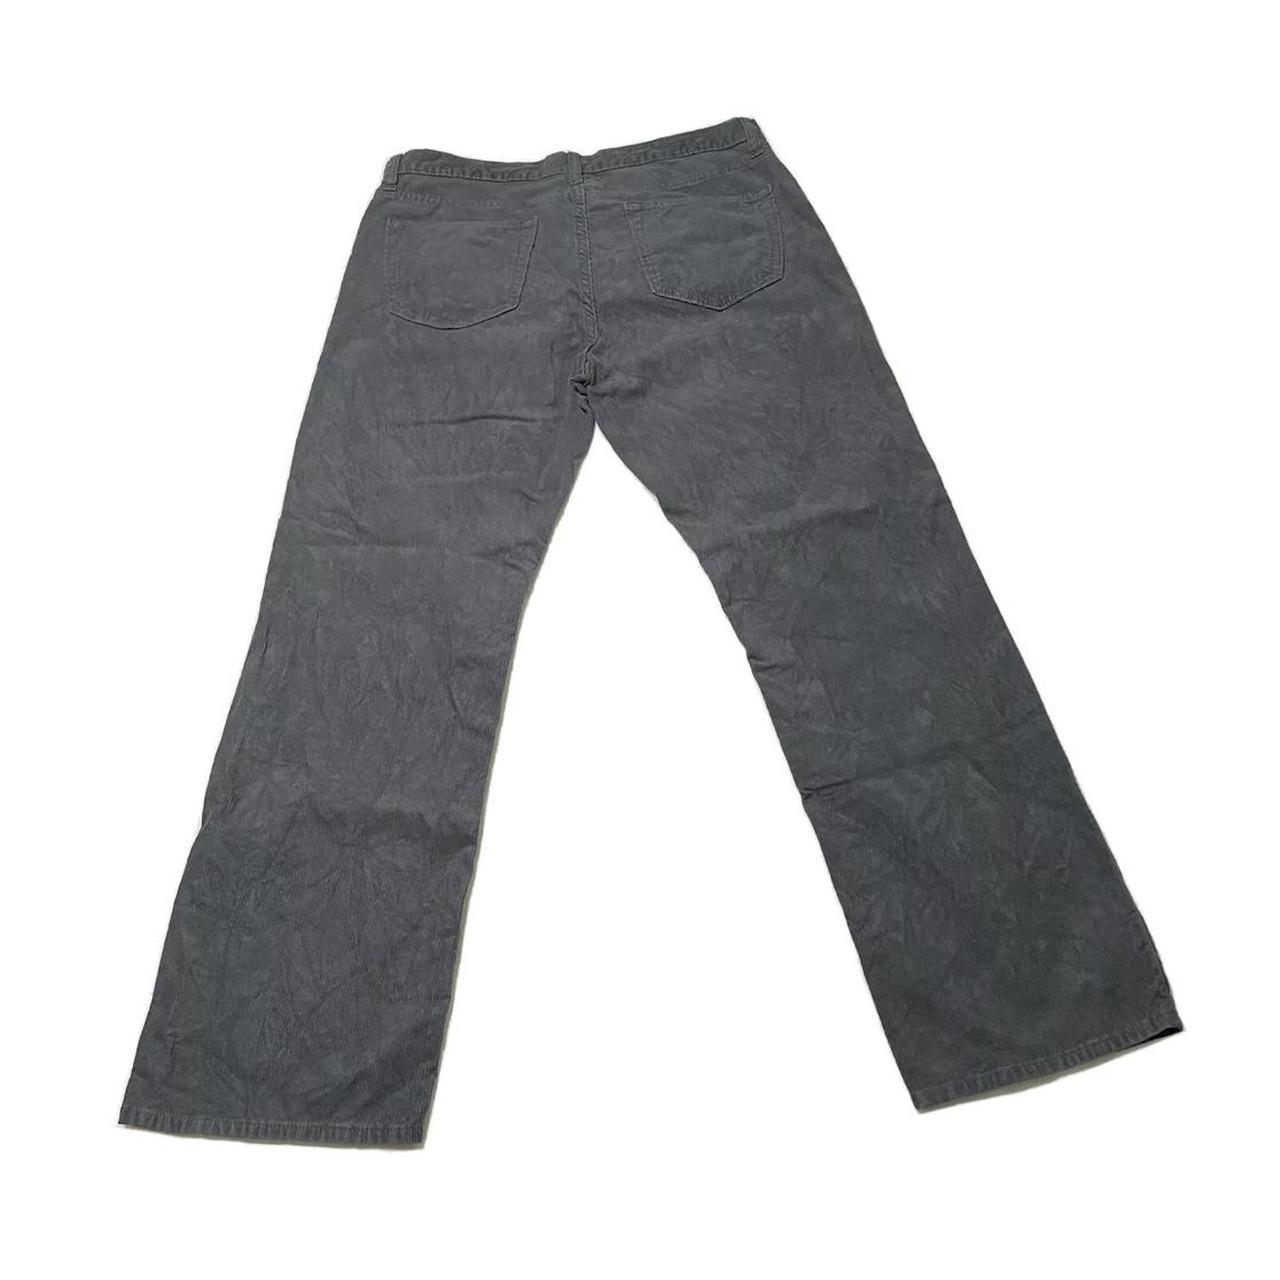 Product Image 2 - Banana Republic Grey Corduroy Pants
Very